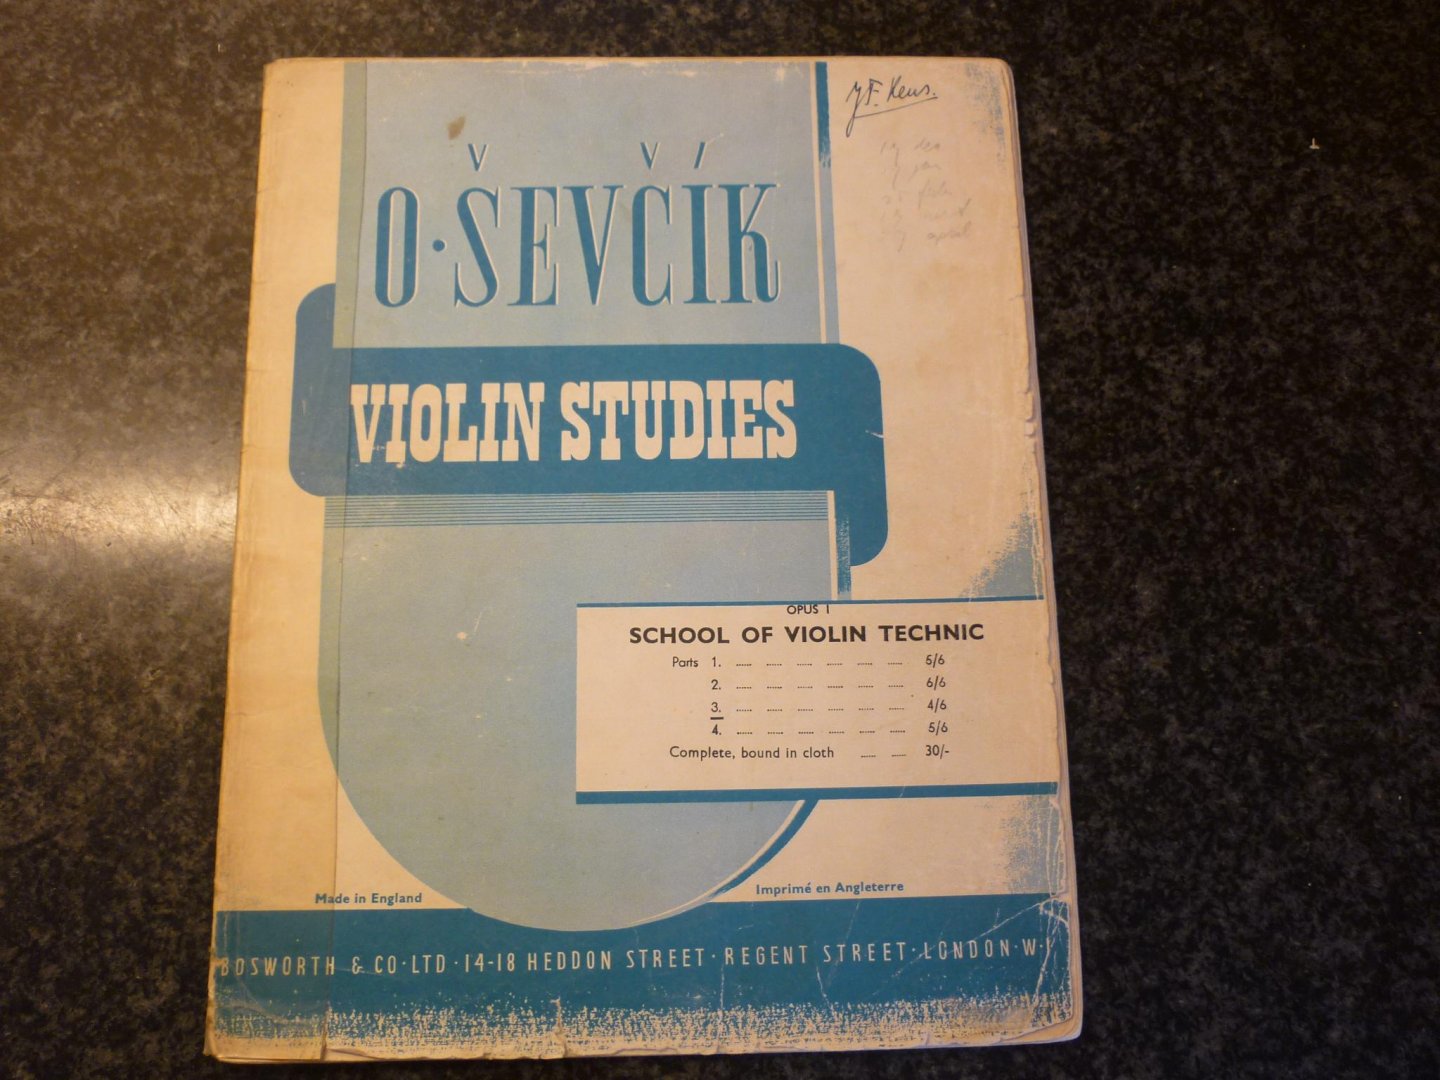 Sevcik; Otakar - Violin Studies; School of Violin Technic Op.1 Vol.3 4/6